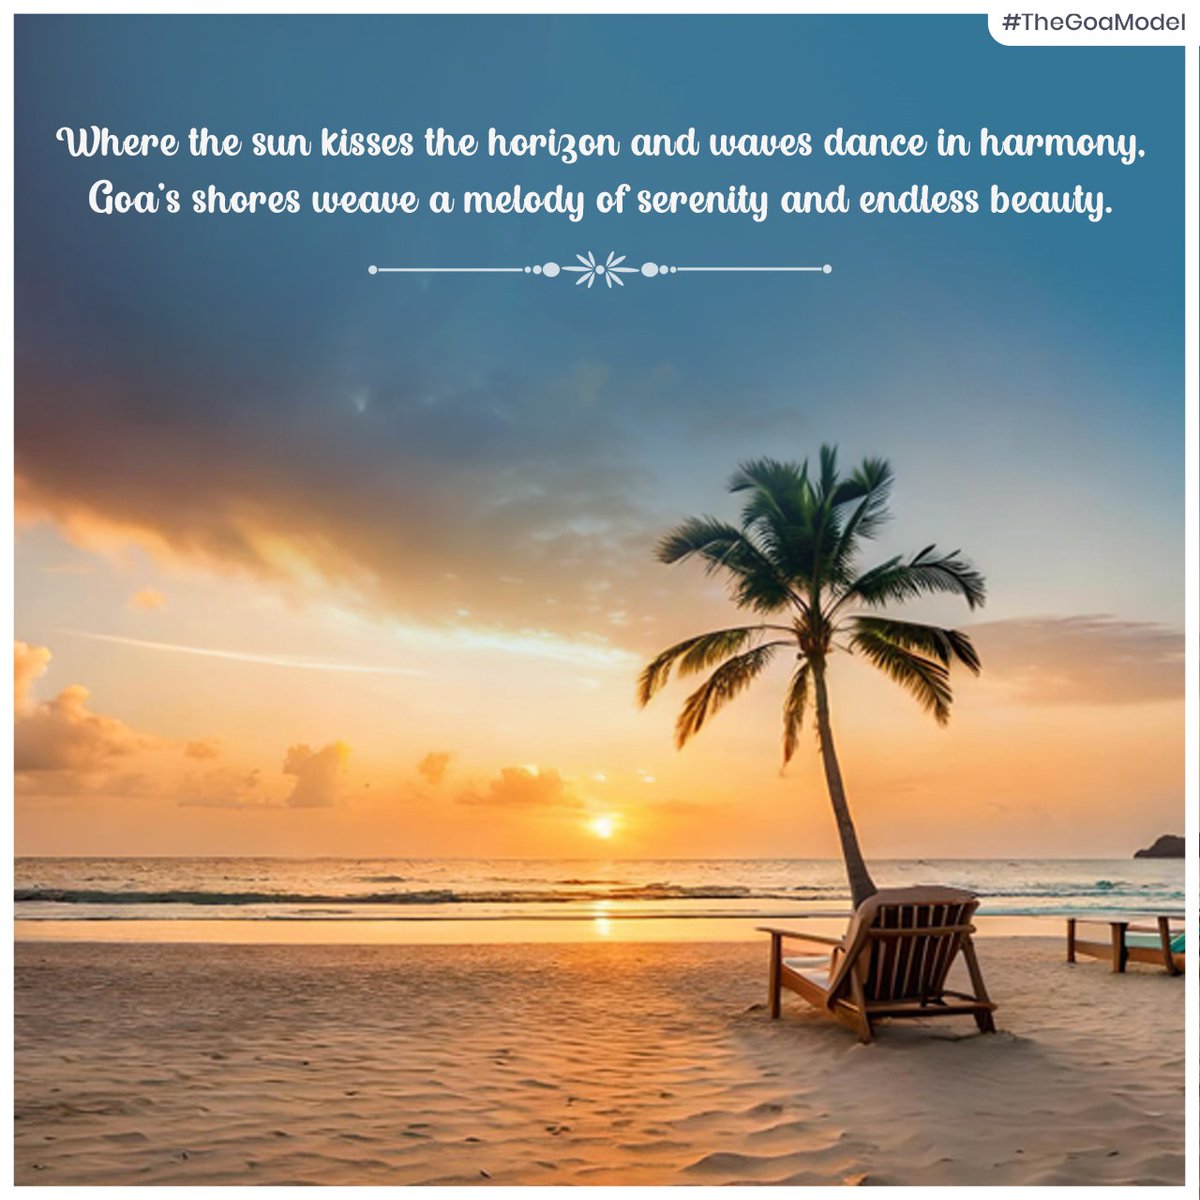 Where the sun kisses the horizon and waves dance in harmony, Goa's shores weave a melody of serenity and endless beauty.
#TheGoaModel
#GoaShores #SunsetMagic #HarmonyOfWaves #Serenity #EndlessBeauty #NatureMelody #CoastalCharm #TranquilSeas #GoldenHorizon #SeasideSerenade